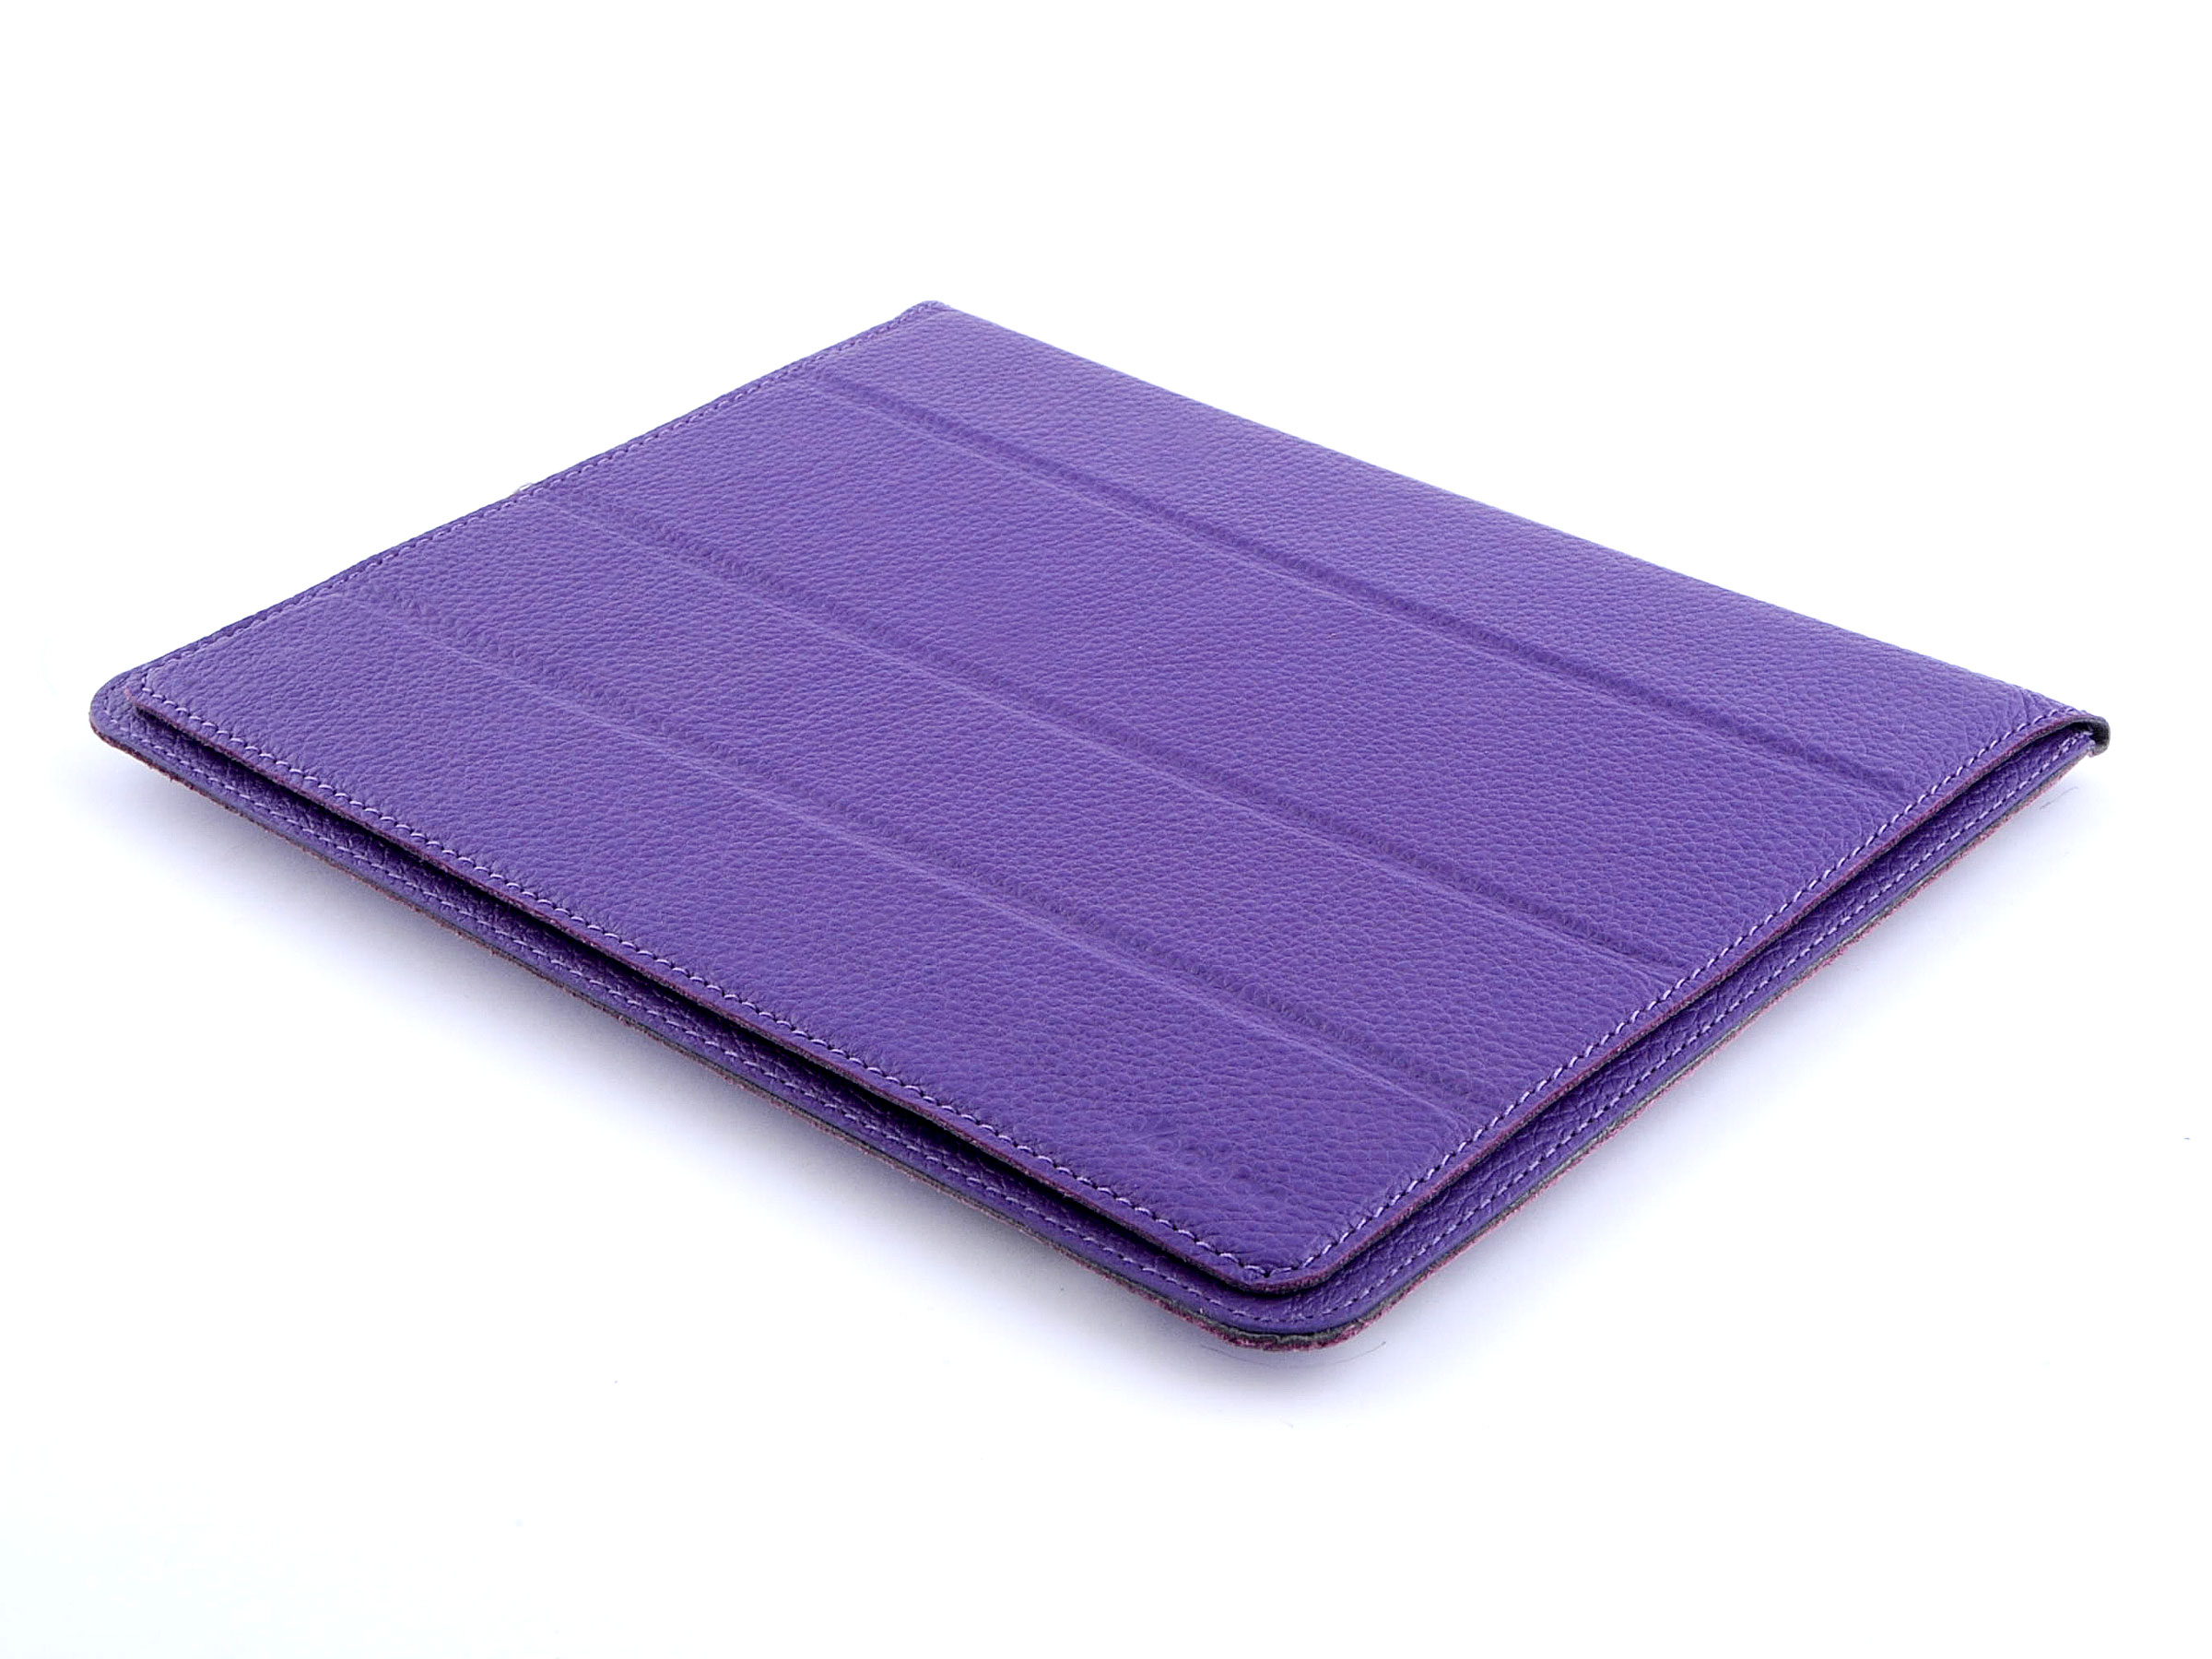 iSmart iPad 3/4 case. Purple